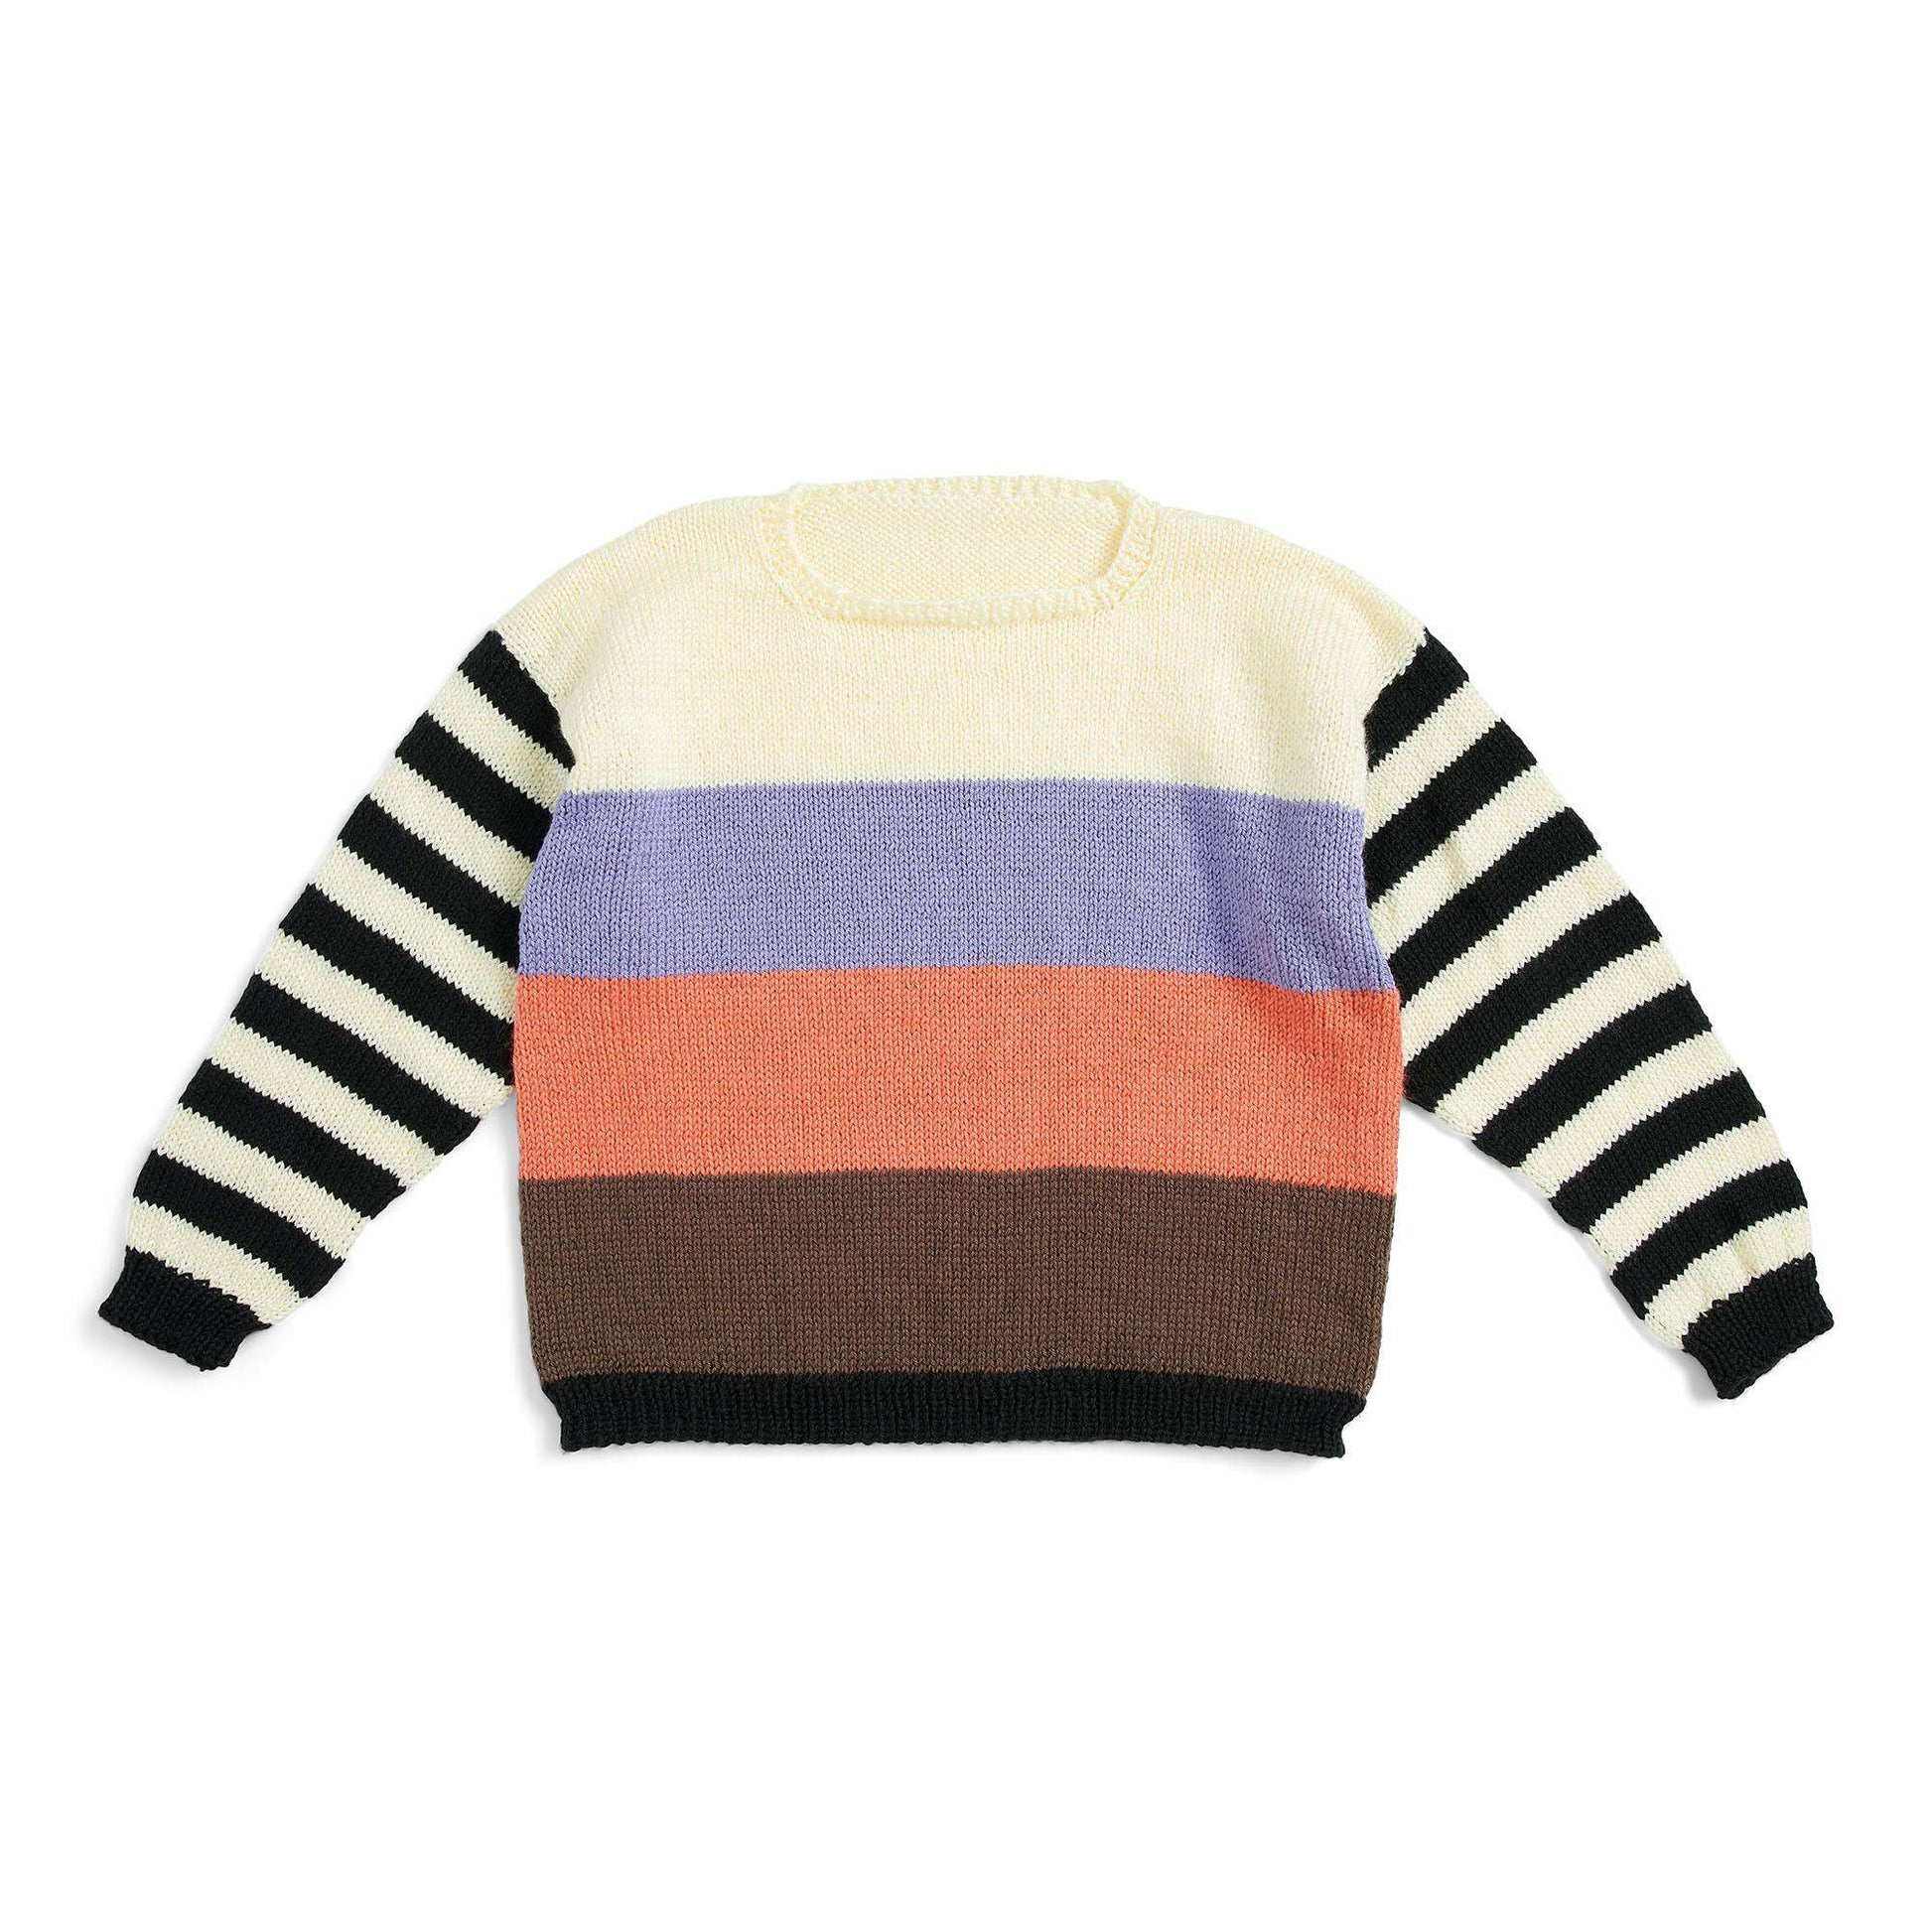 Free Caron Change Your Stripes Knit Sweater Pattern